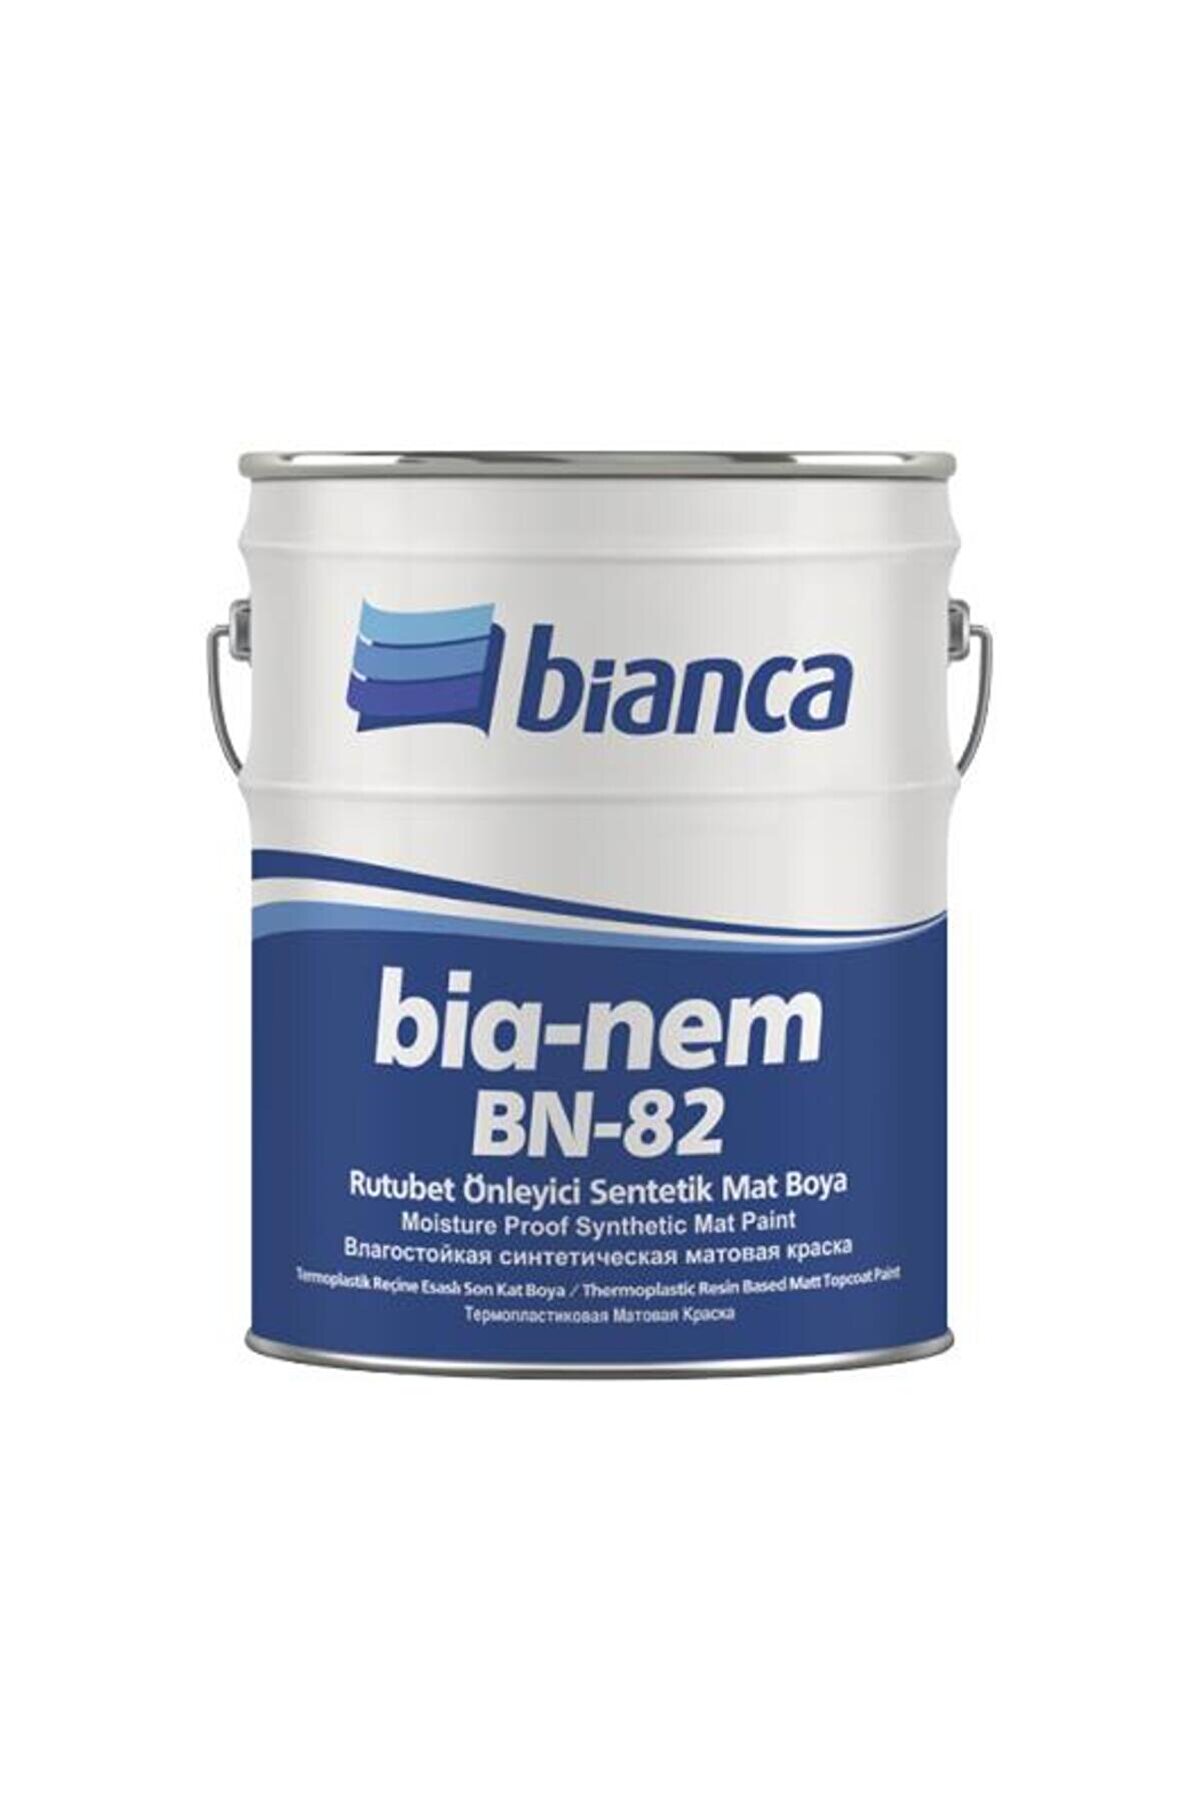 Bianca Bia-nem (NEM ÖNLEYİCİ) 0,75lt